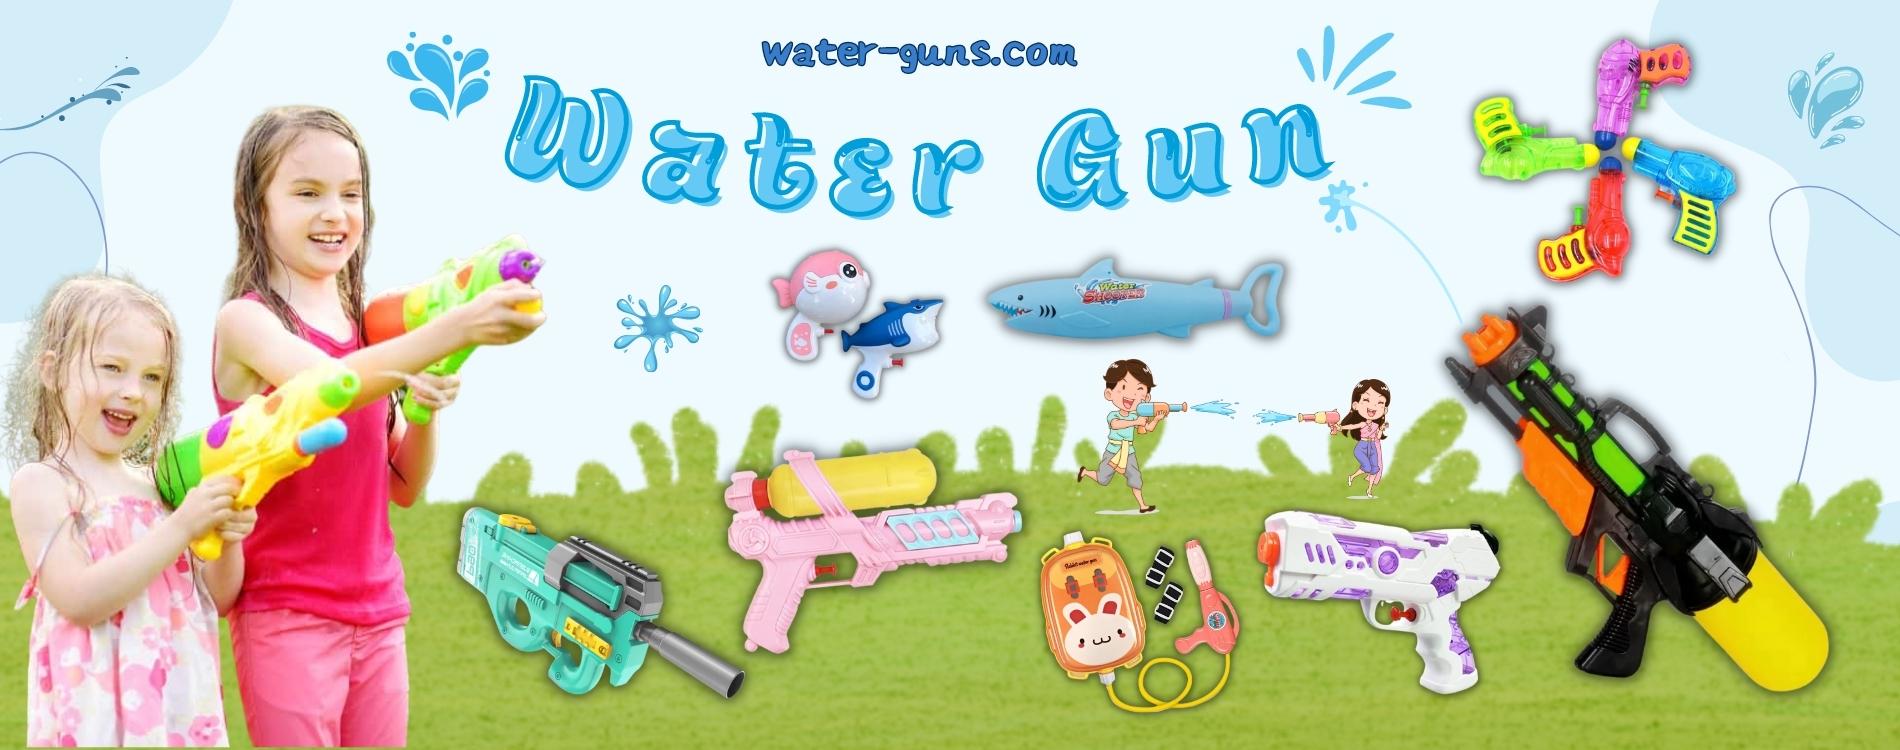 (c) Water-guns.com